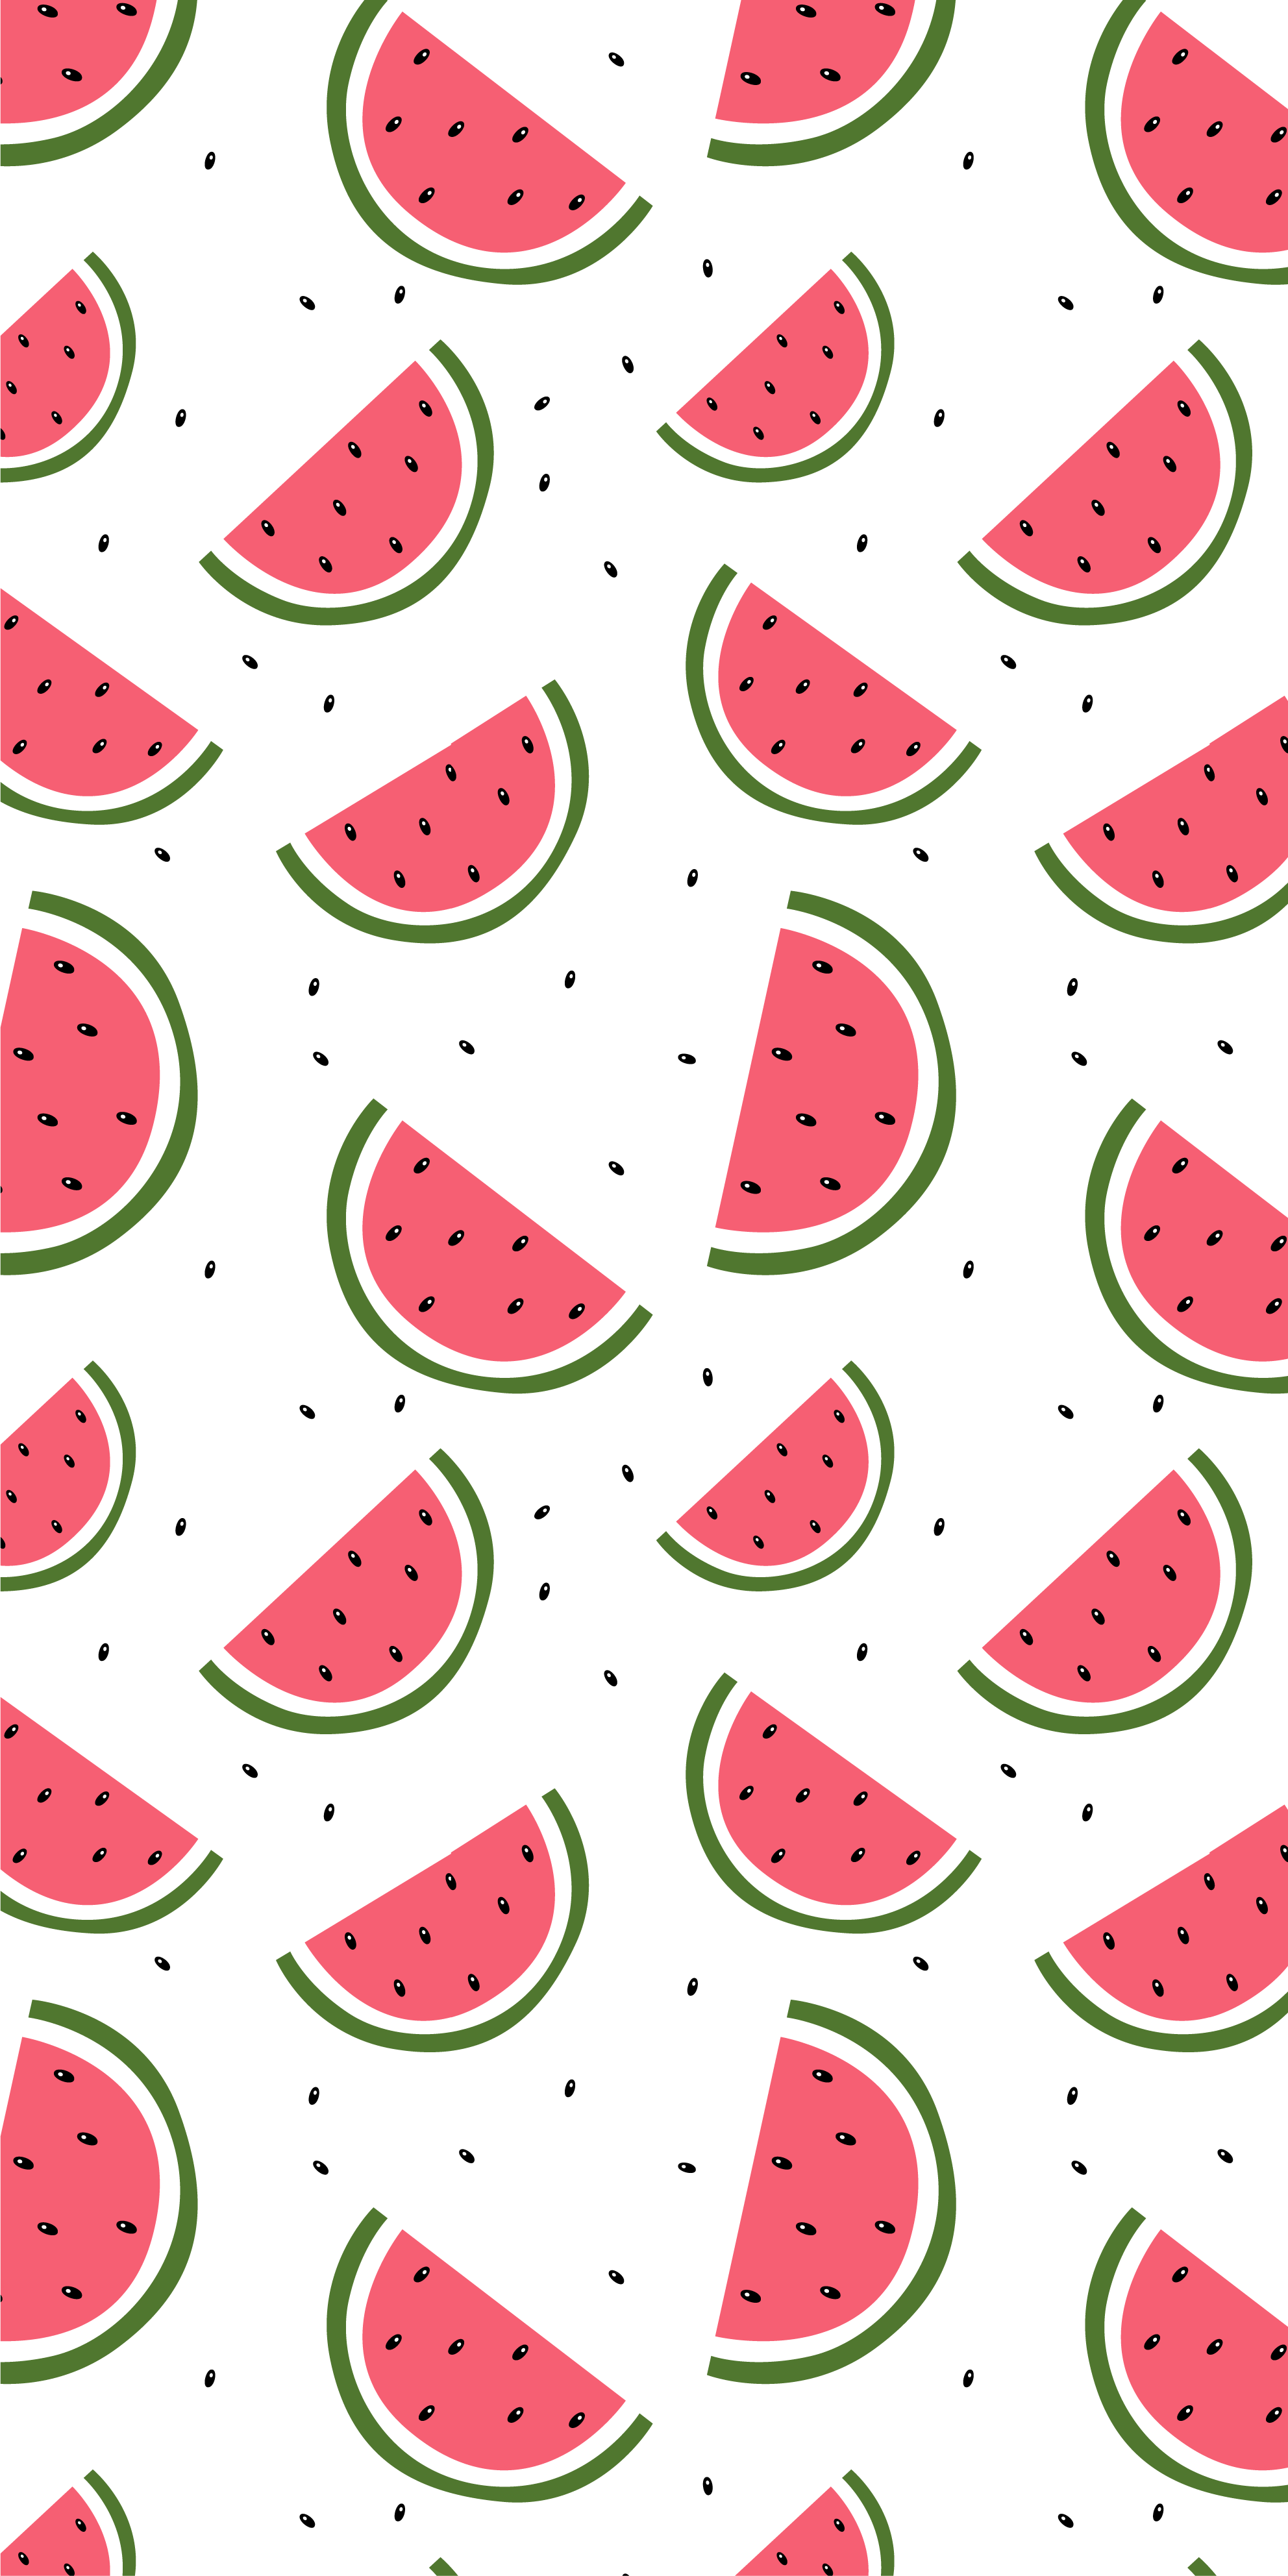 Watermelon Wallpaper Pack V 92dzf